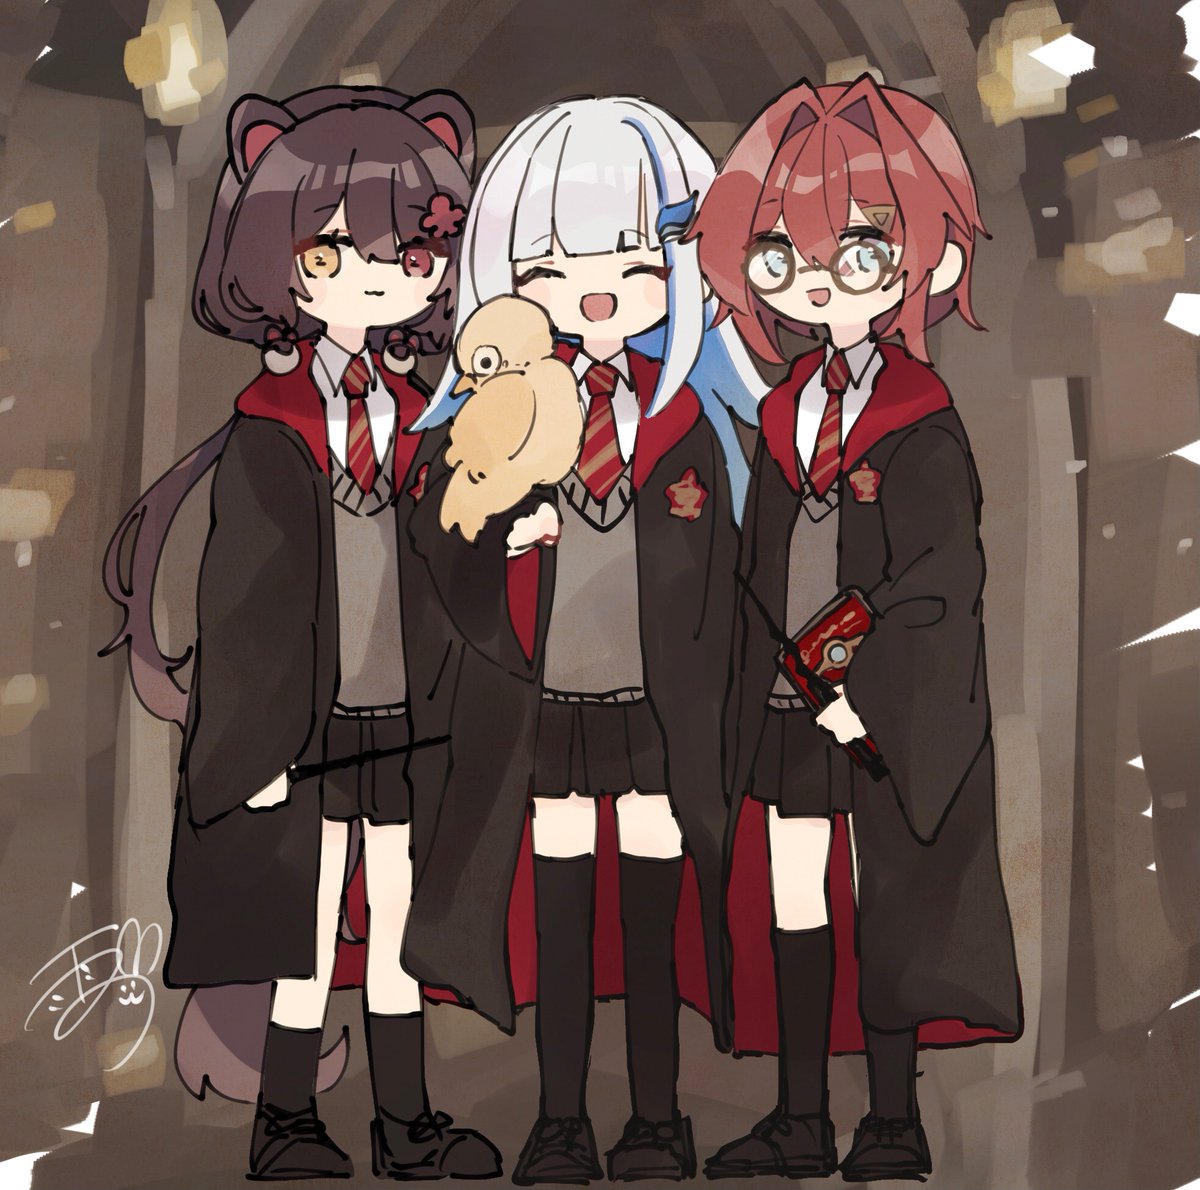 ange katrina ,inui toko ,lize helesta multiple girls 3girls hogwarts school uniform heterochromia necktie skirt ^ ^  illustration images